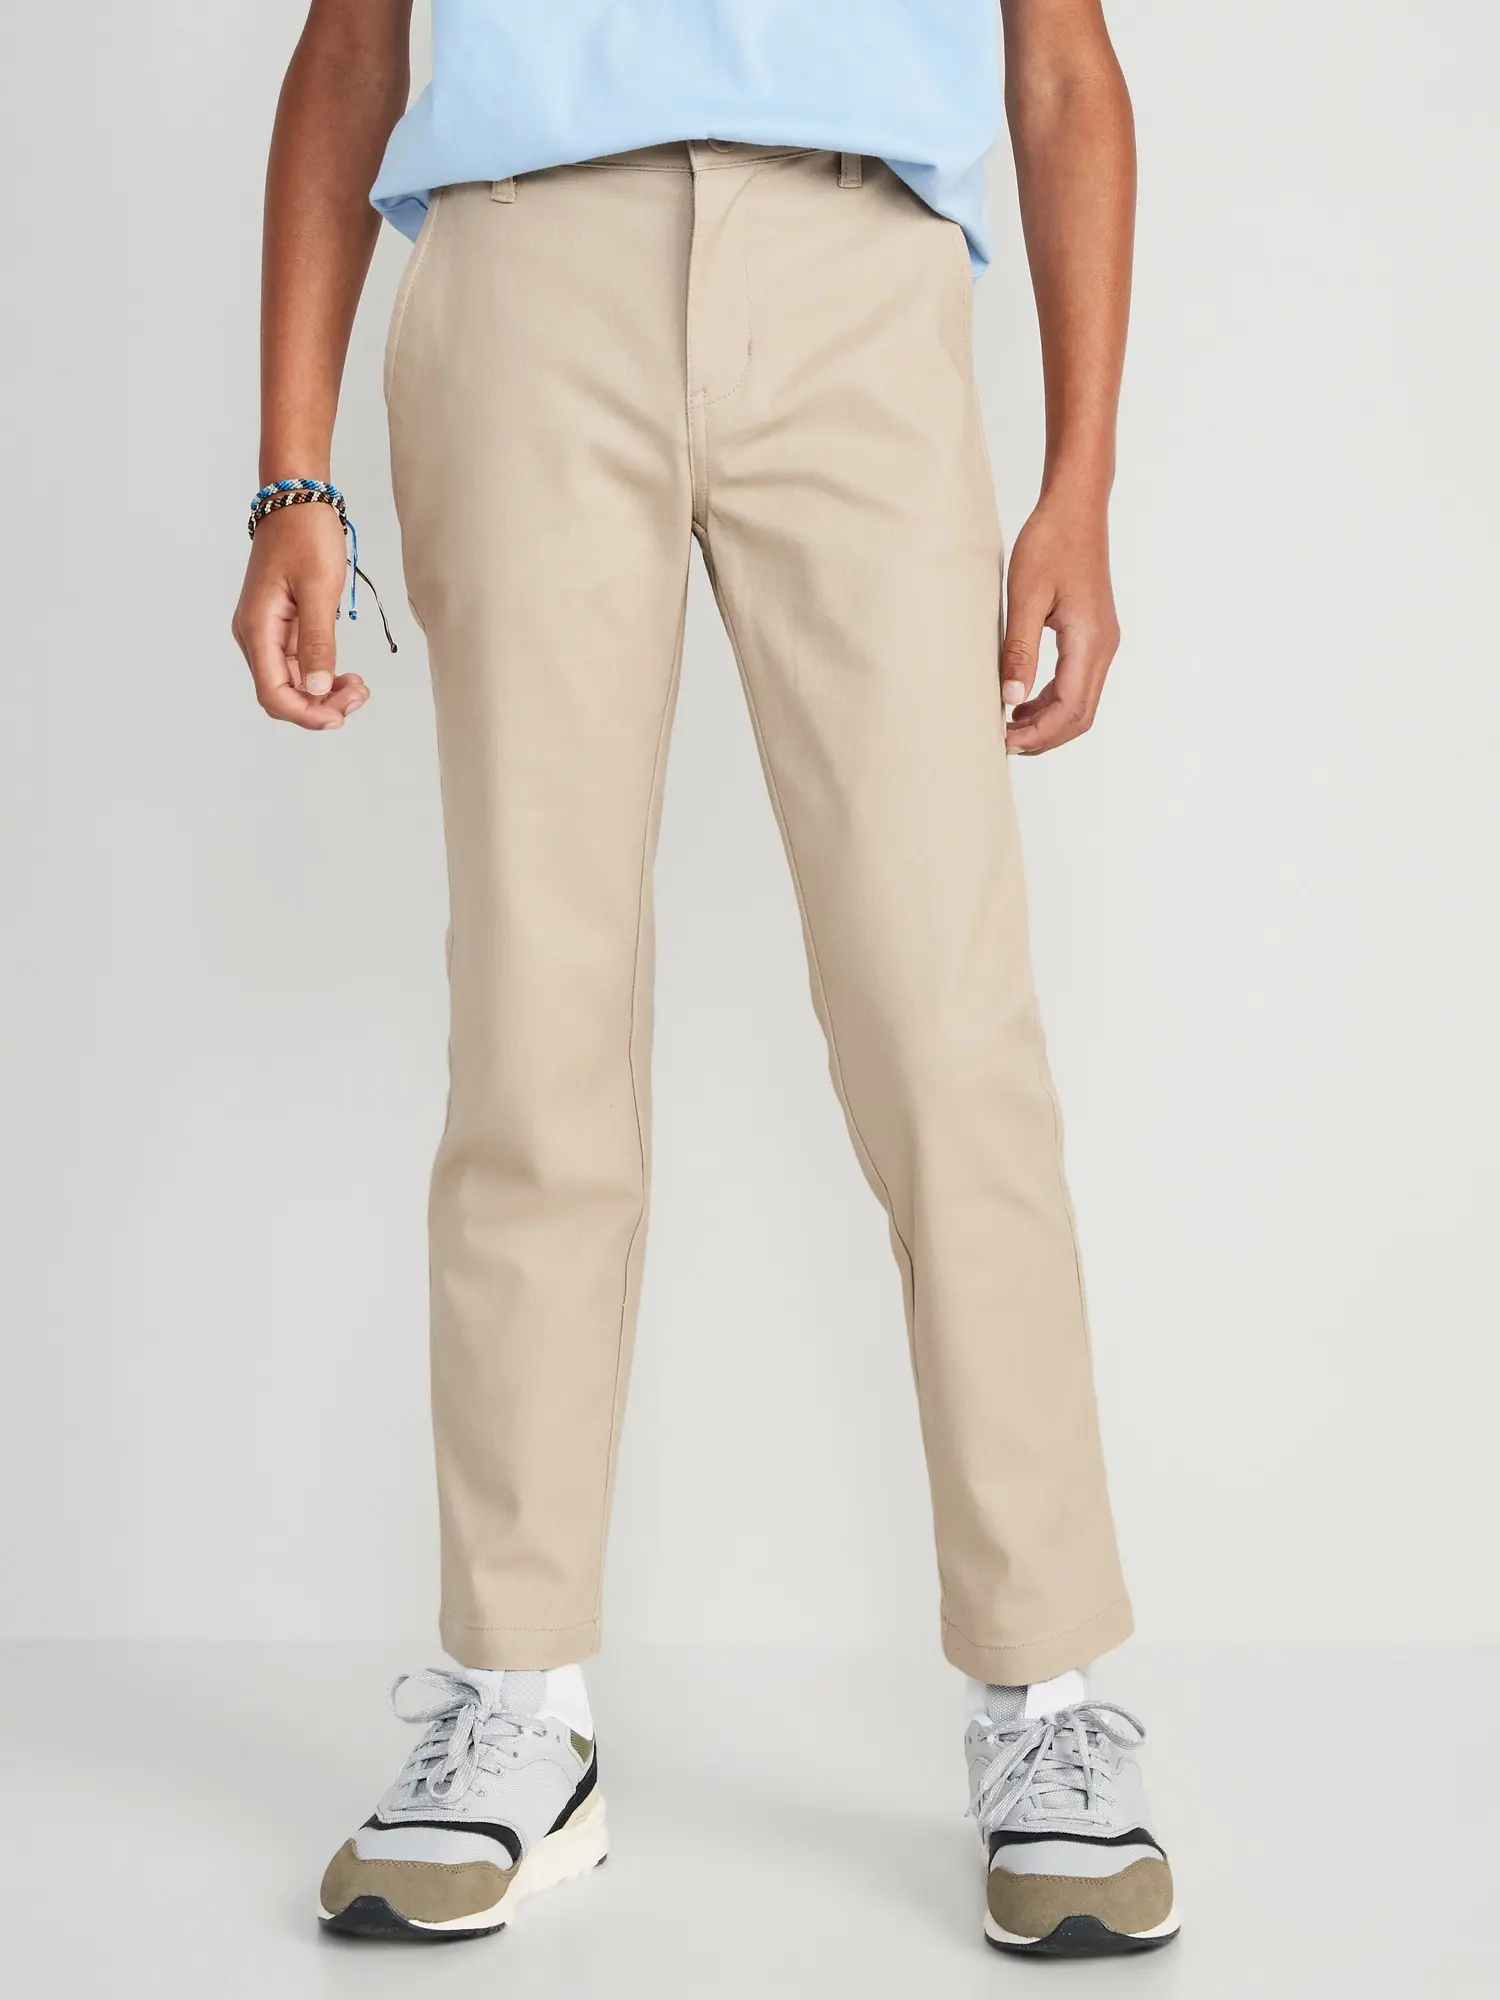 Old Navy Slim School Uniform Chino Pants for Boys beige. 1